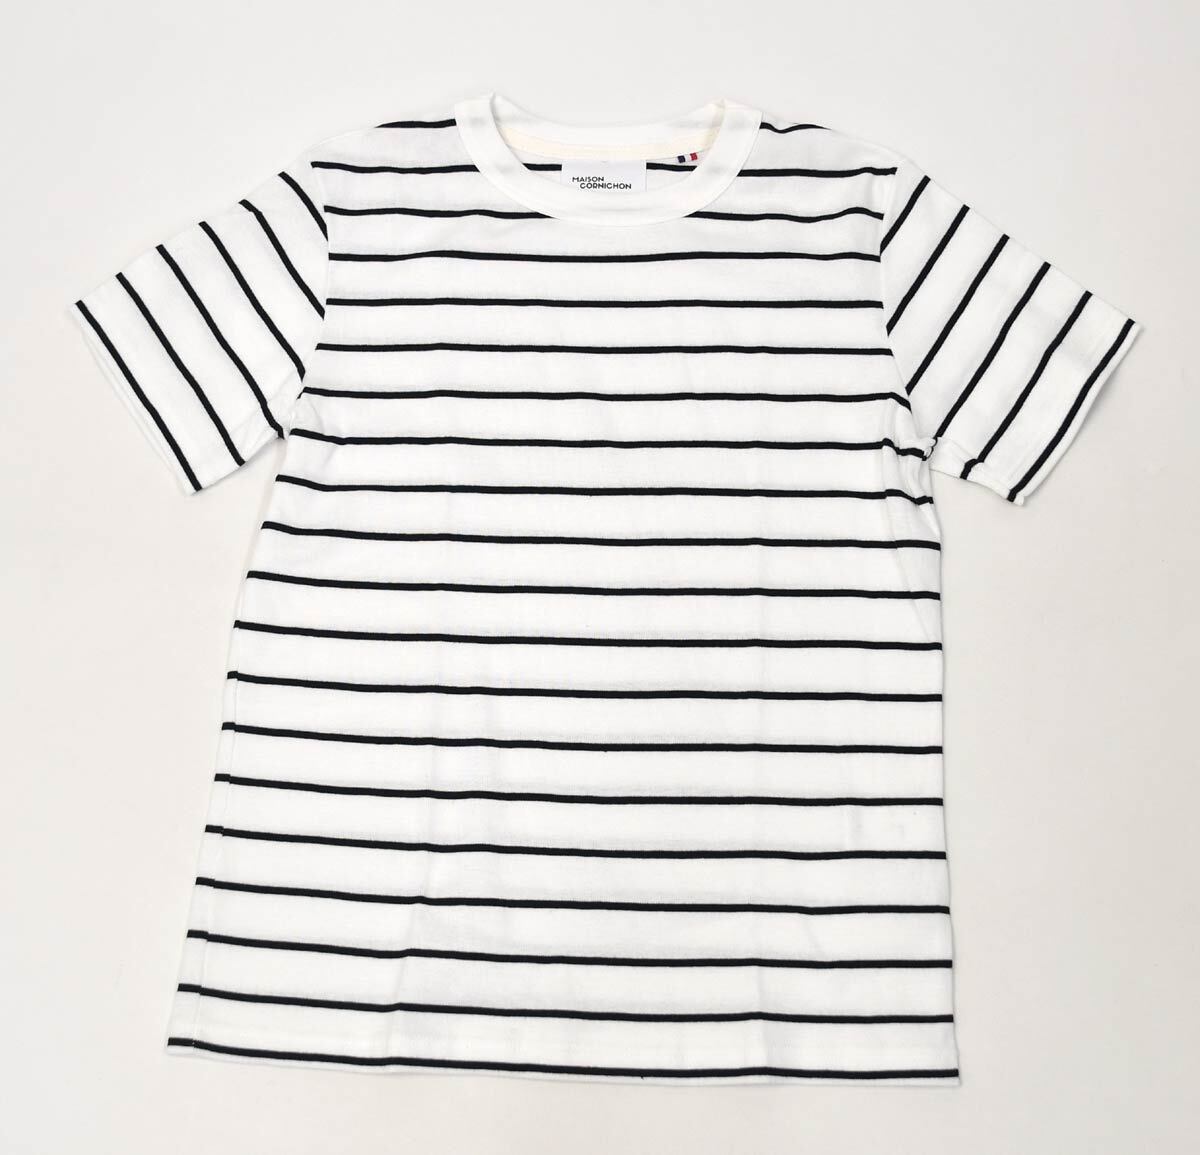  new goods mezzo nkorunishonMaison Cornichon short sleeves T-shirt 0 border white Classic Fit cotton f rice knitted T-shirt 